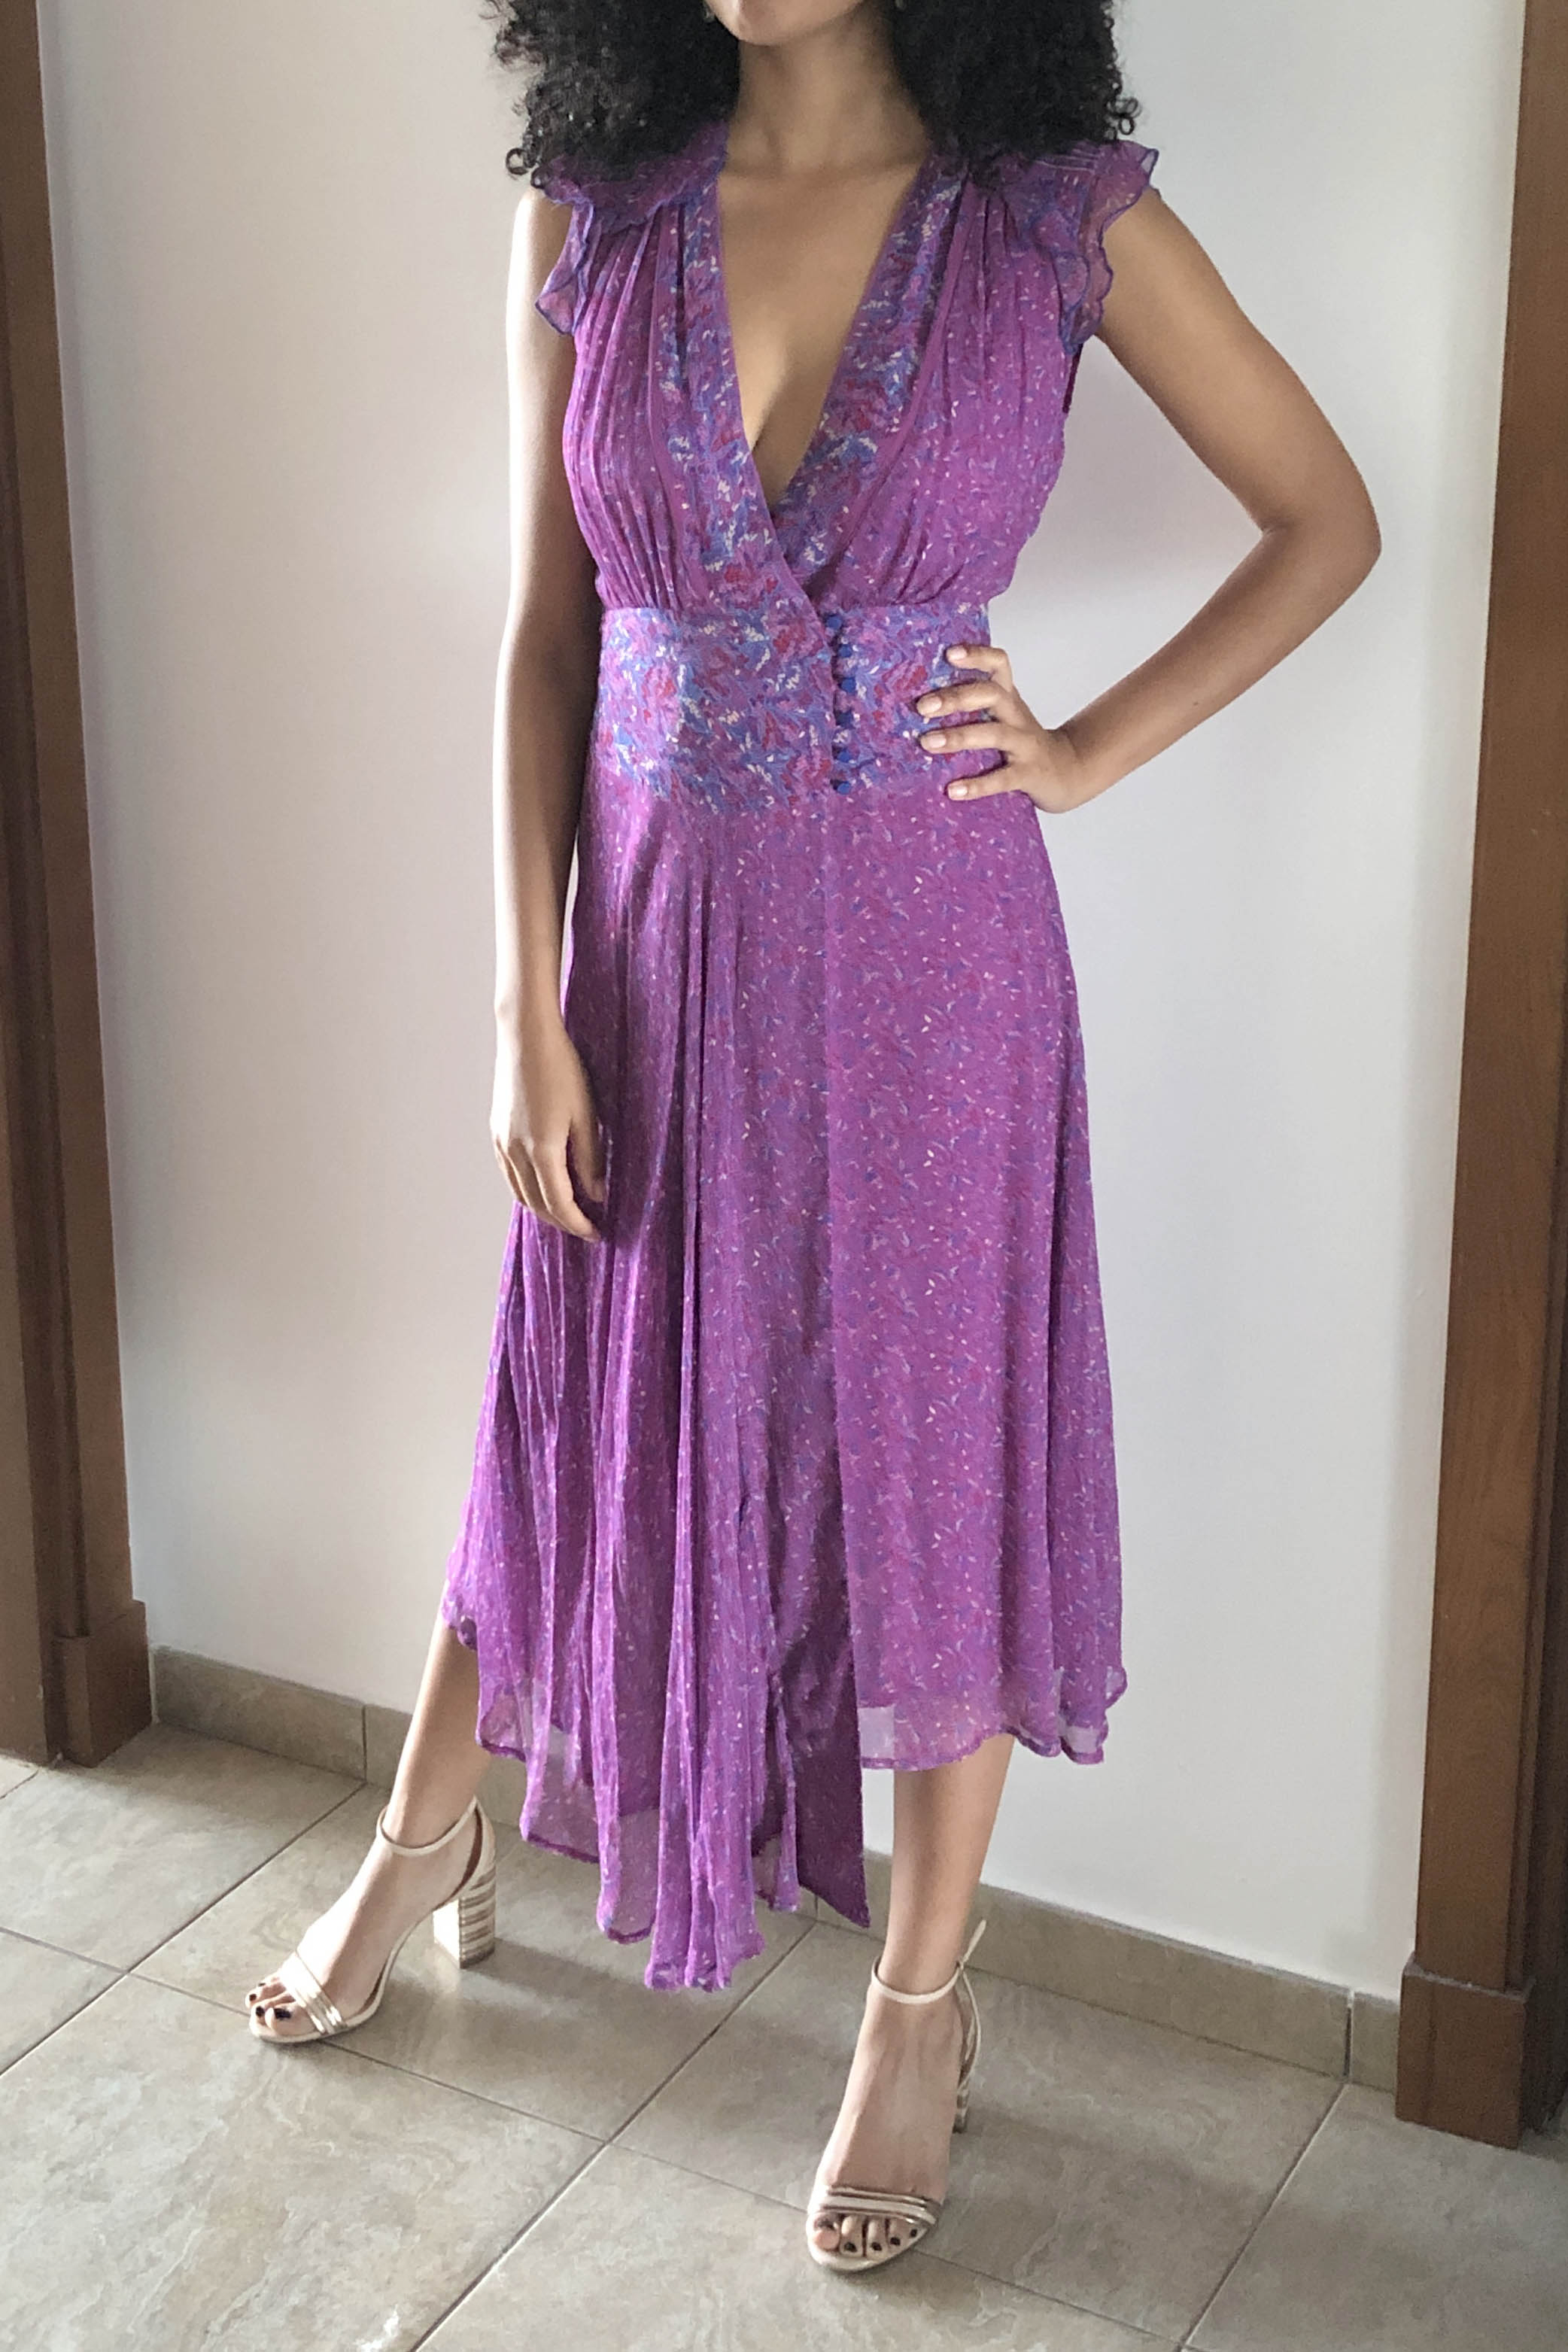 B&SH Purple Floral Sleeveless Dress (Small)